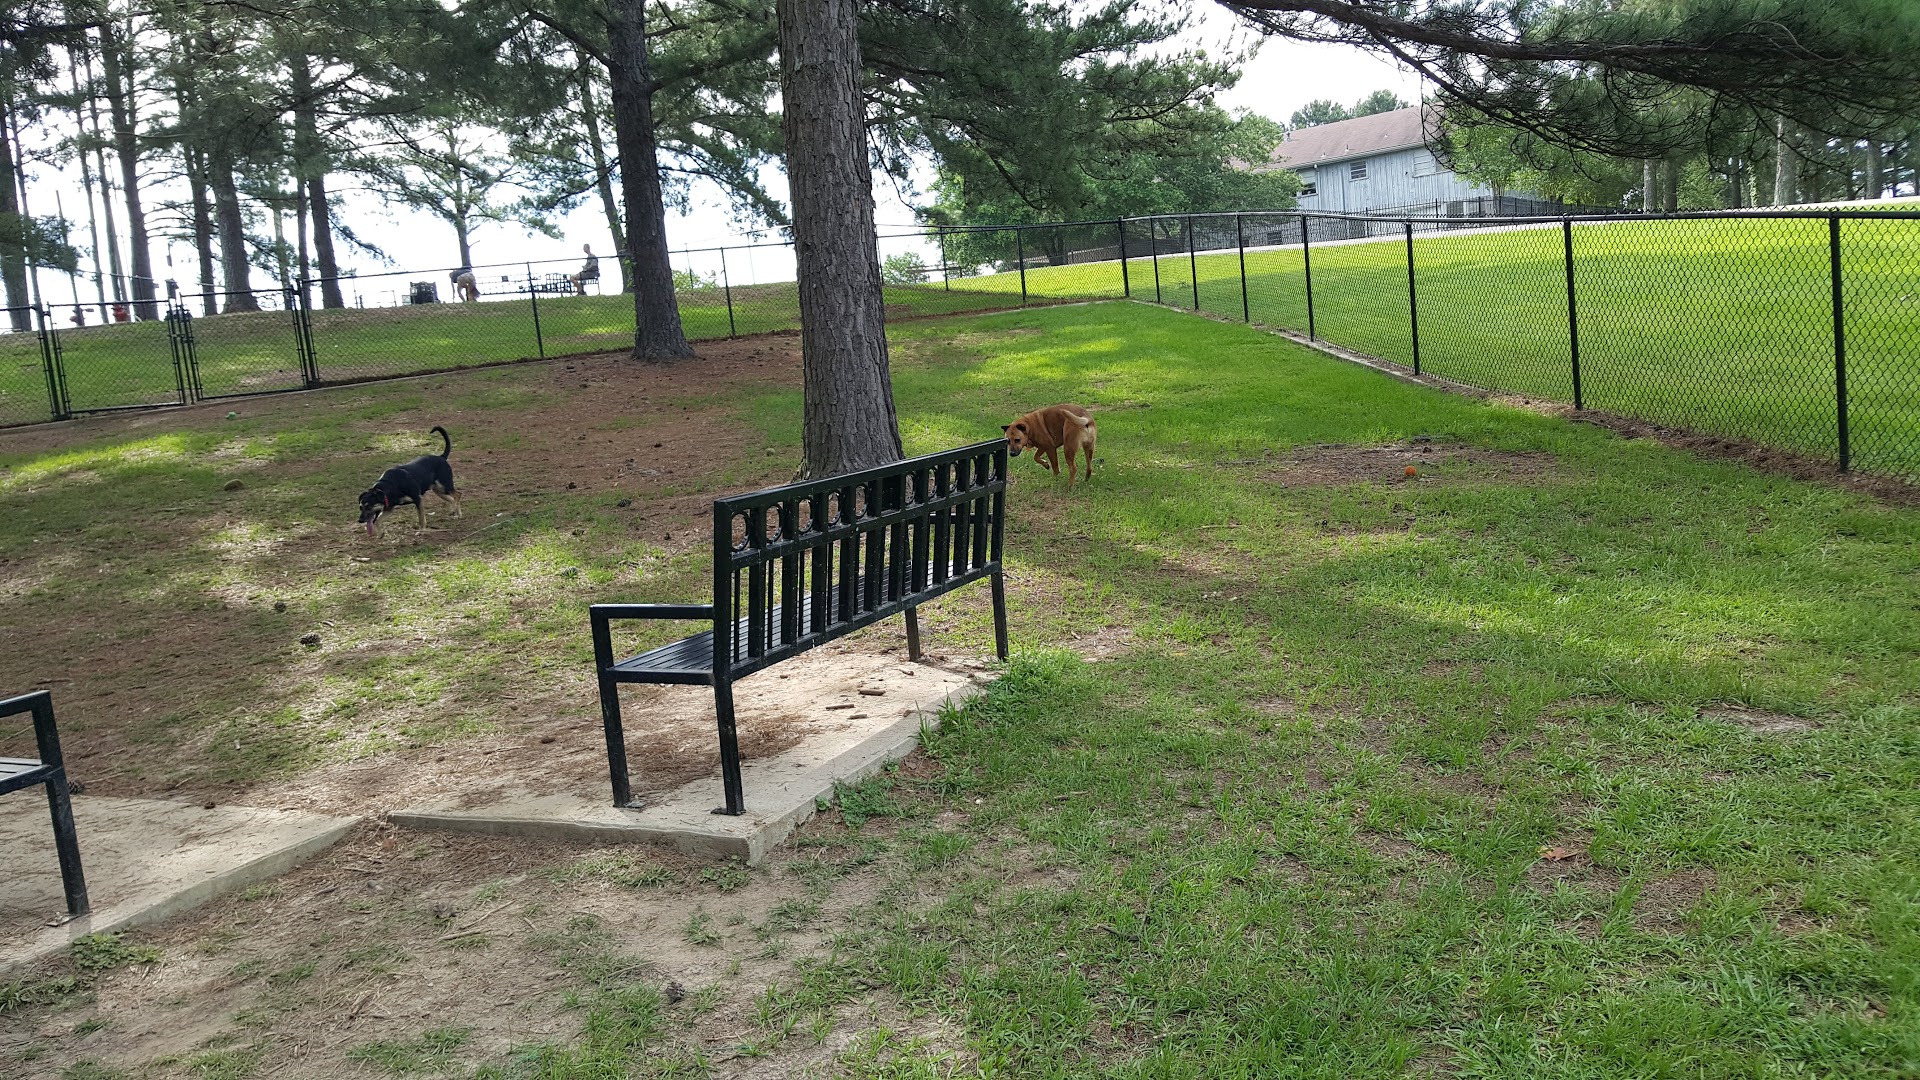 Dog Park at The Rez